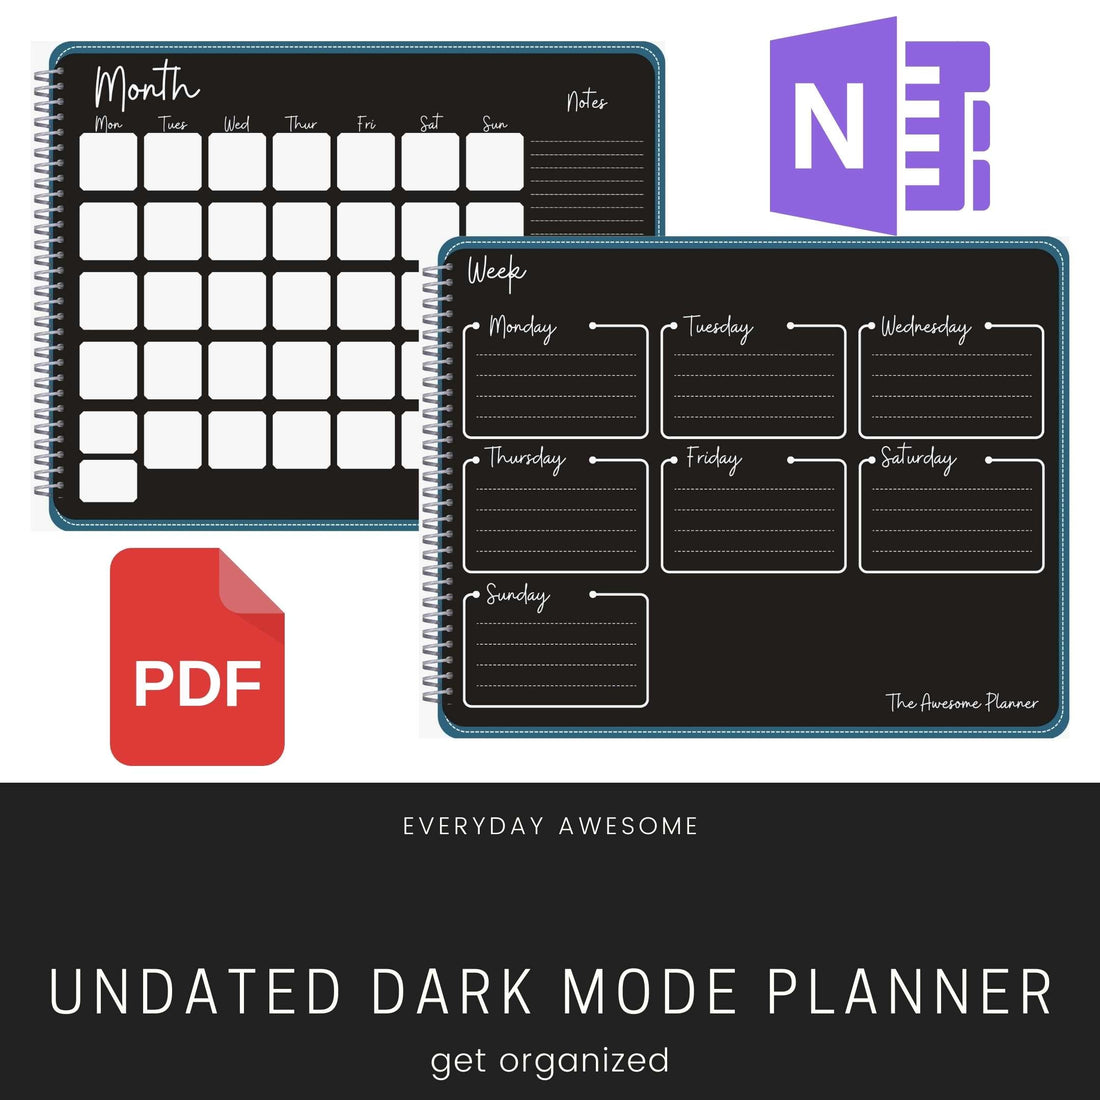 dark mode planner images